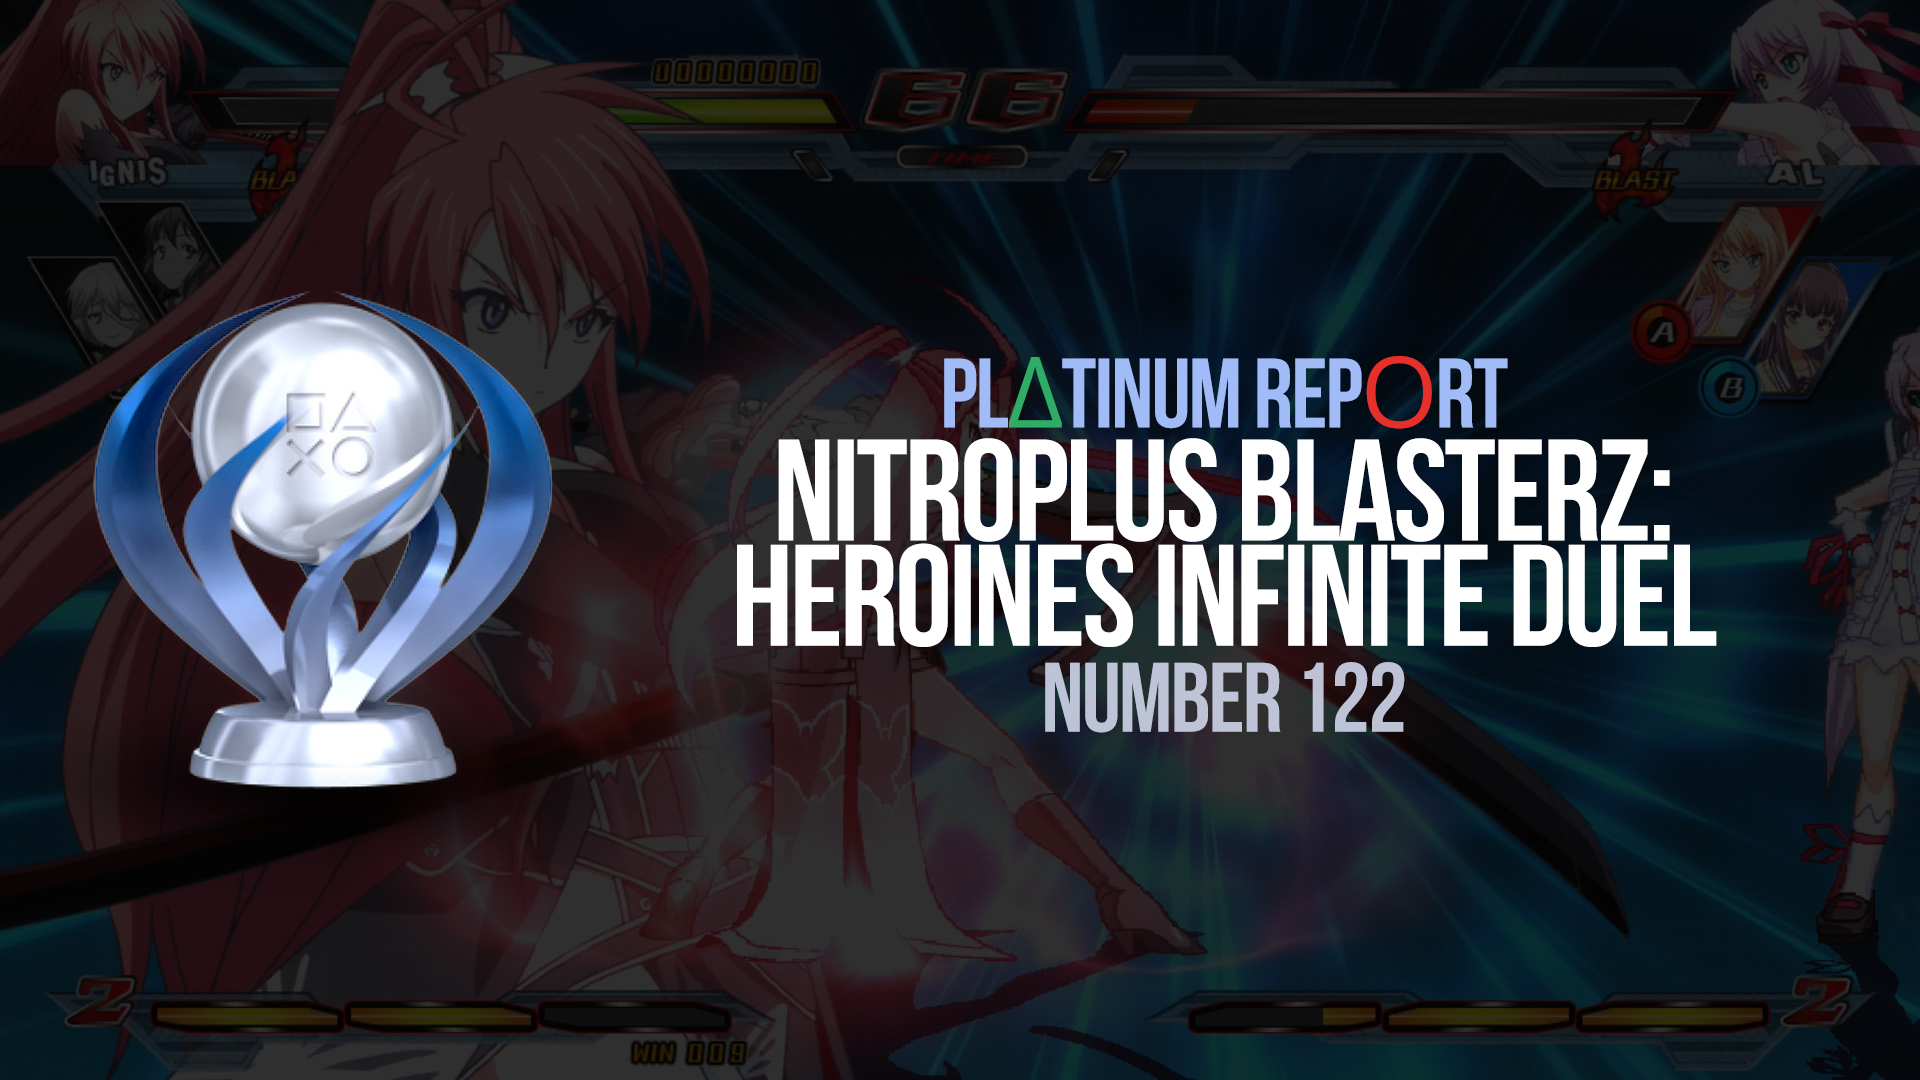 Platinum Report: Nitroplus Blasterz: Heroines Infinite Duel #122